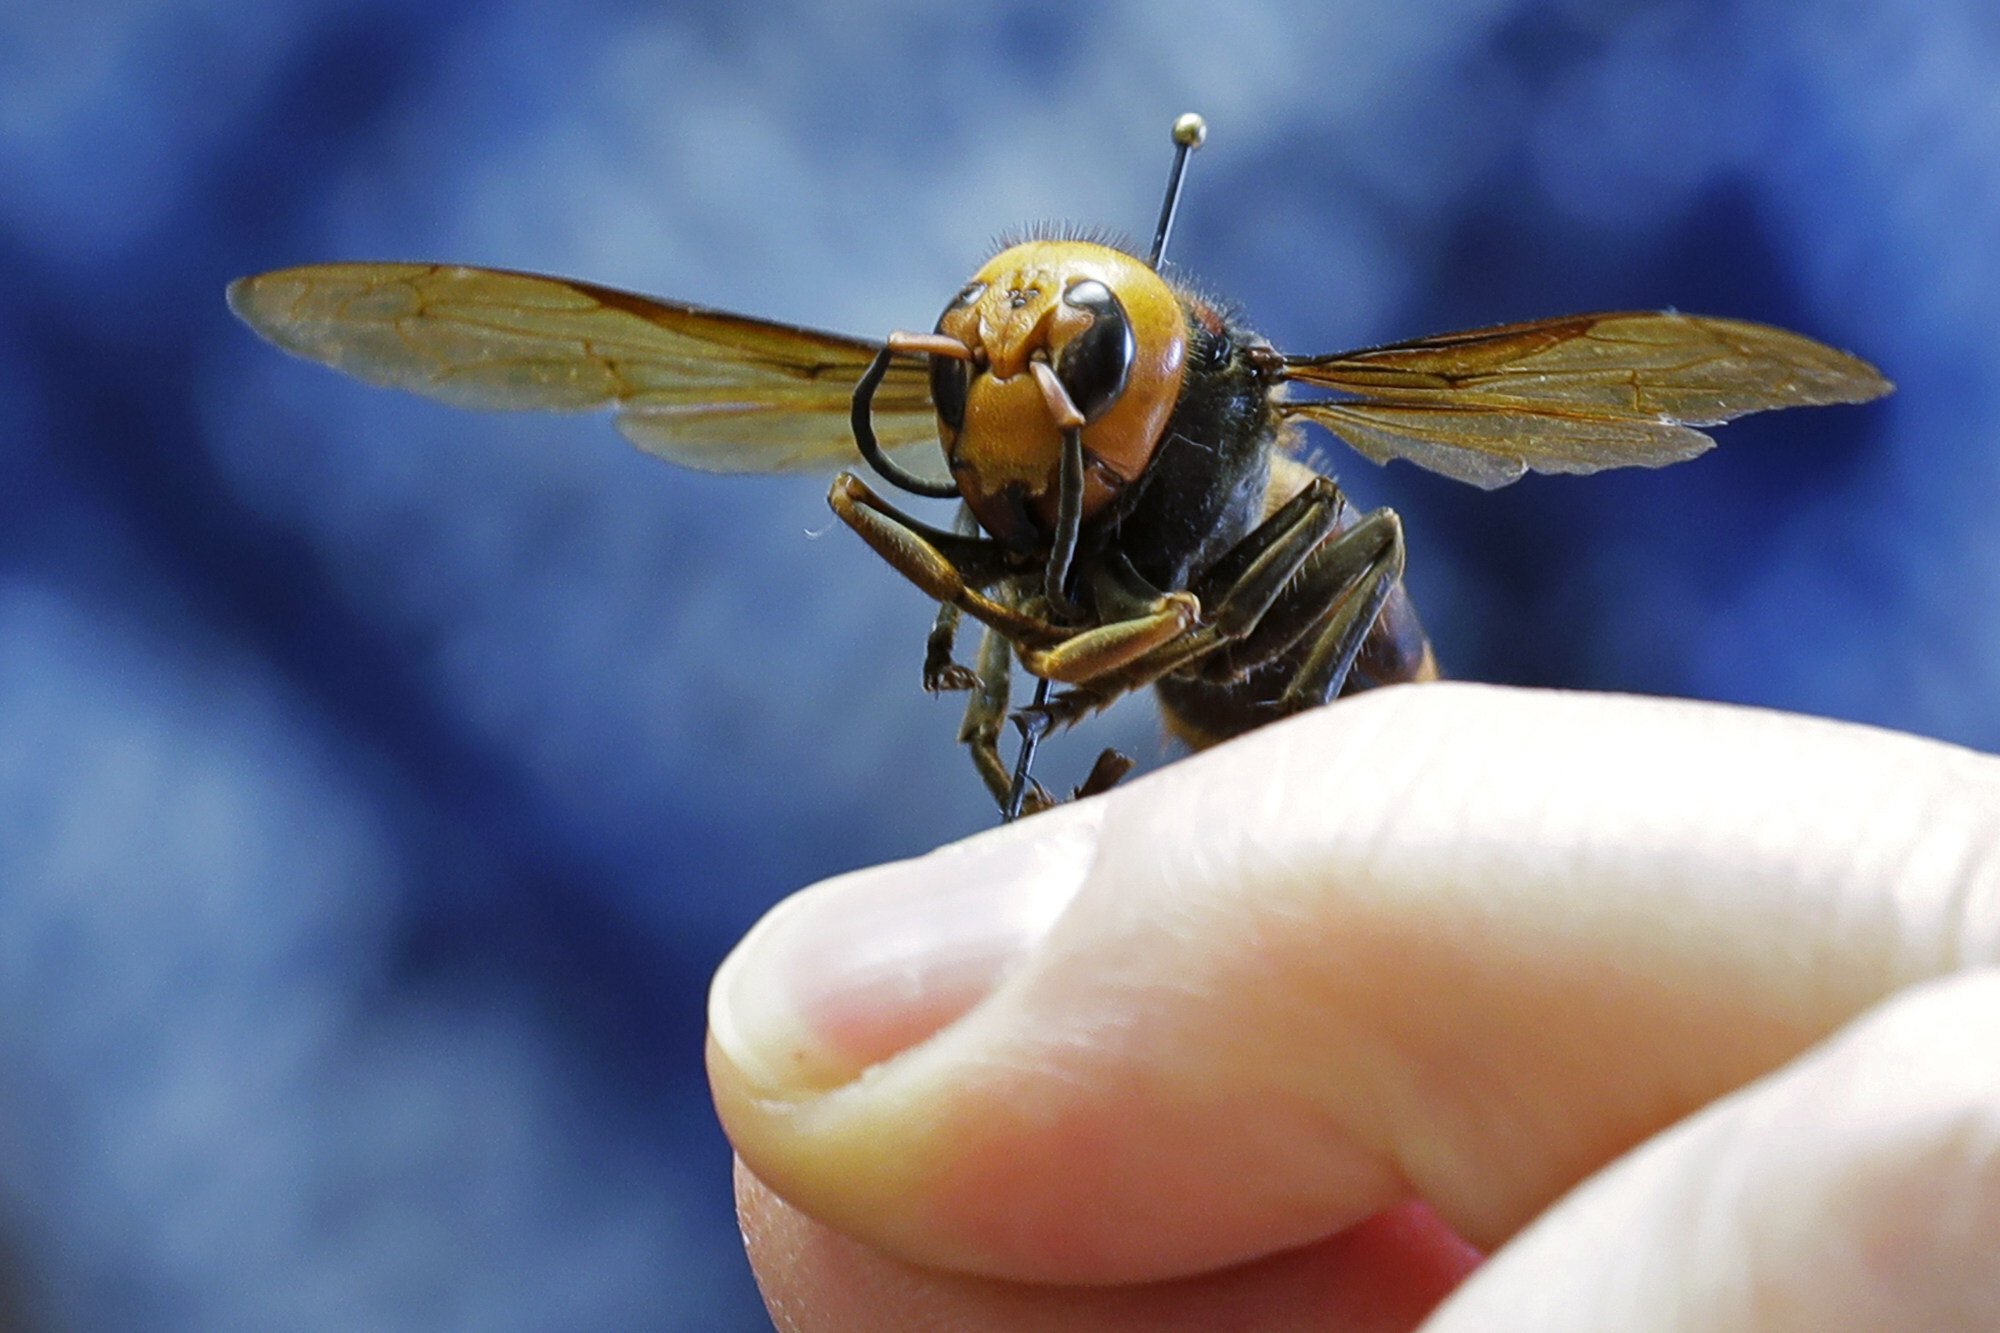 Dead ‘murder hornet’ found near Seattle, Washington is first identified in United States this year